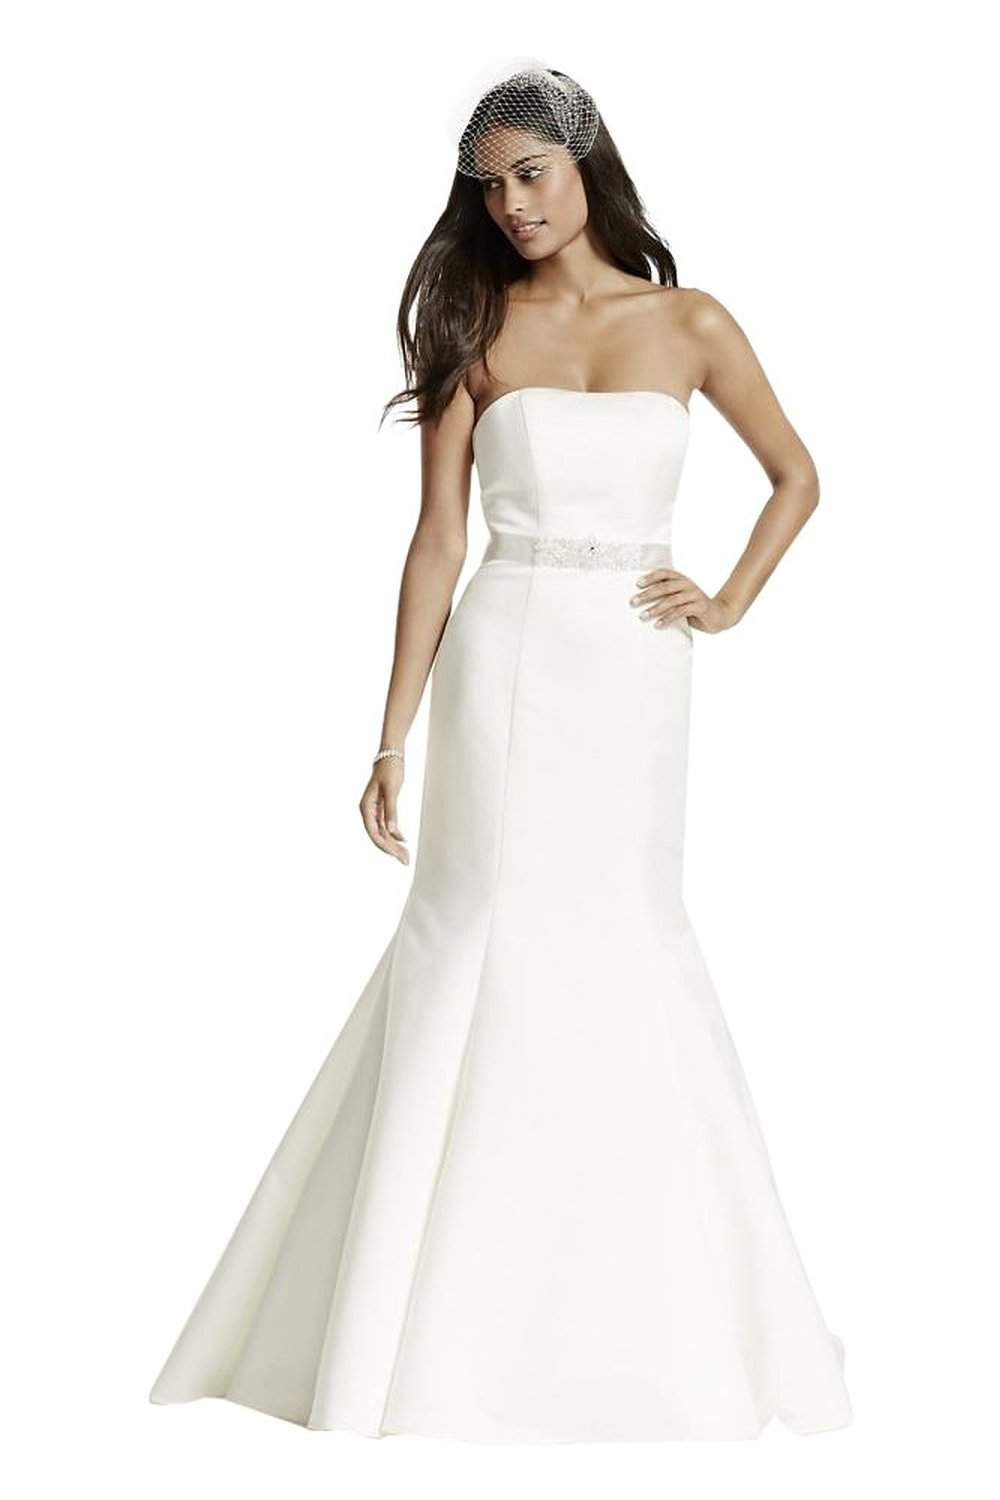 Inexpensive Wedding Gowns
 Top 50 Best Cheap Wedding Dresses